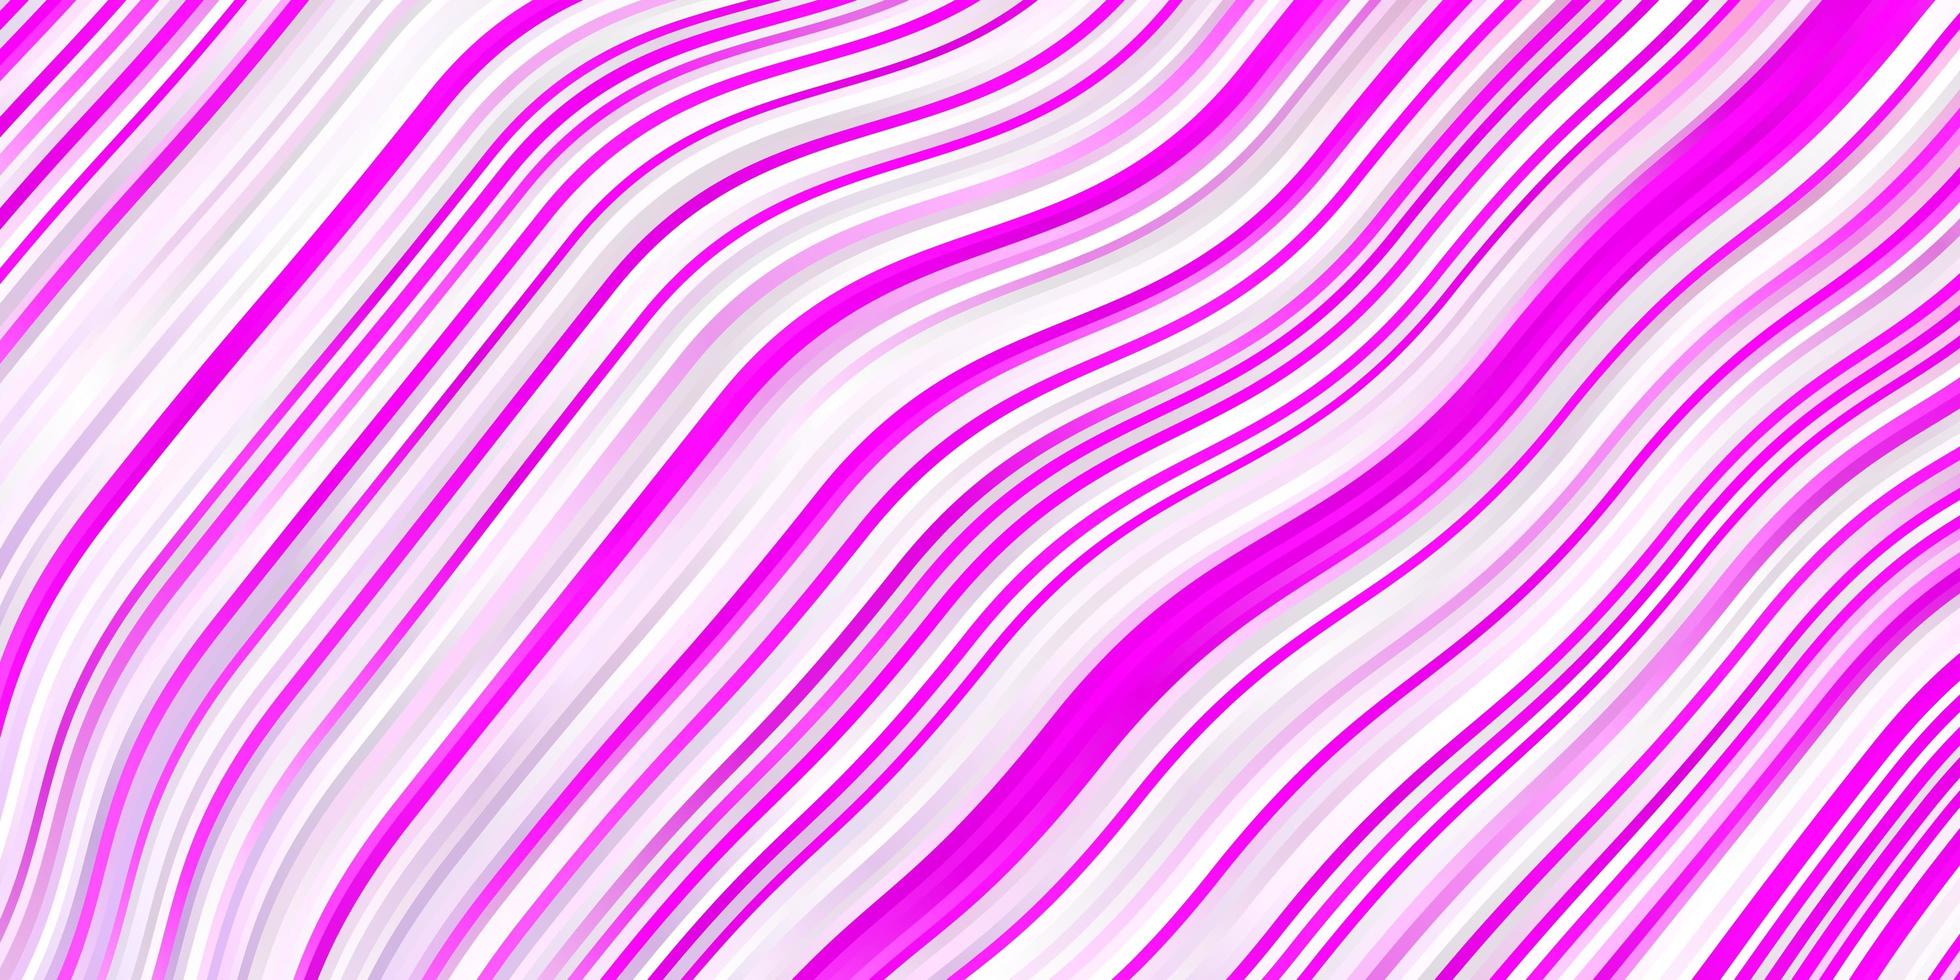 Fondo de vector violeta, rosa claro con líneas dobladas.